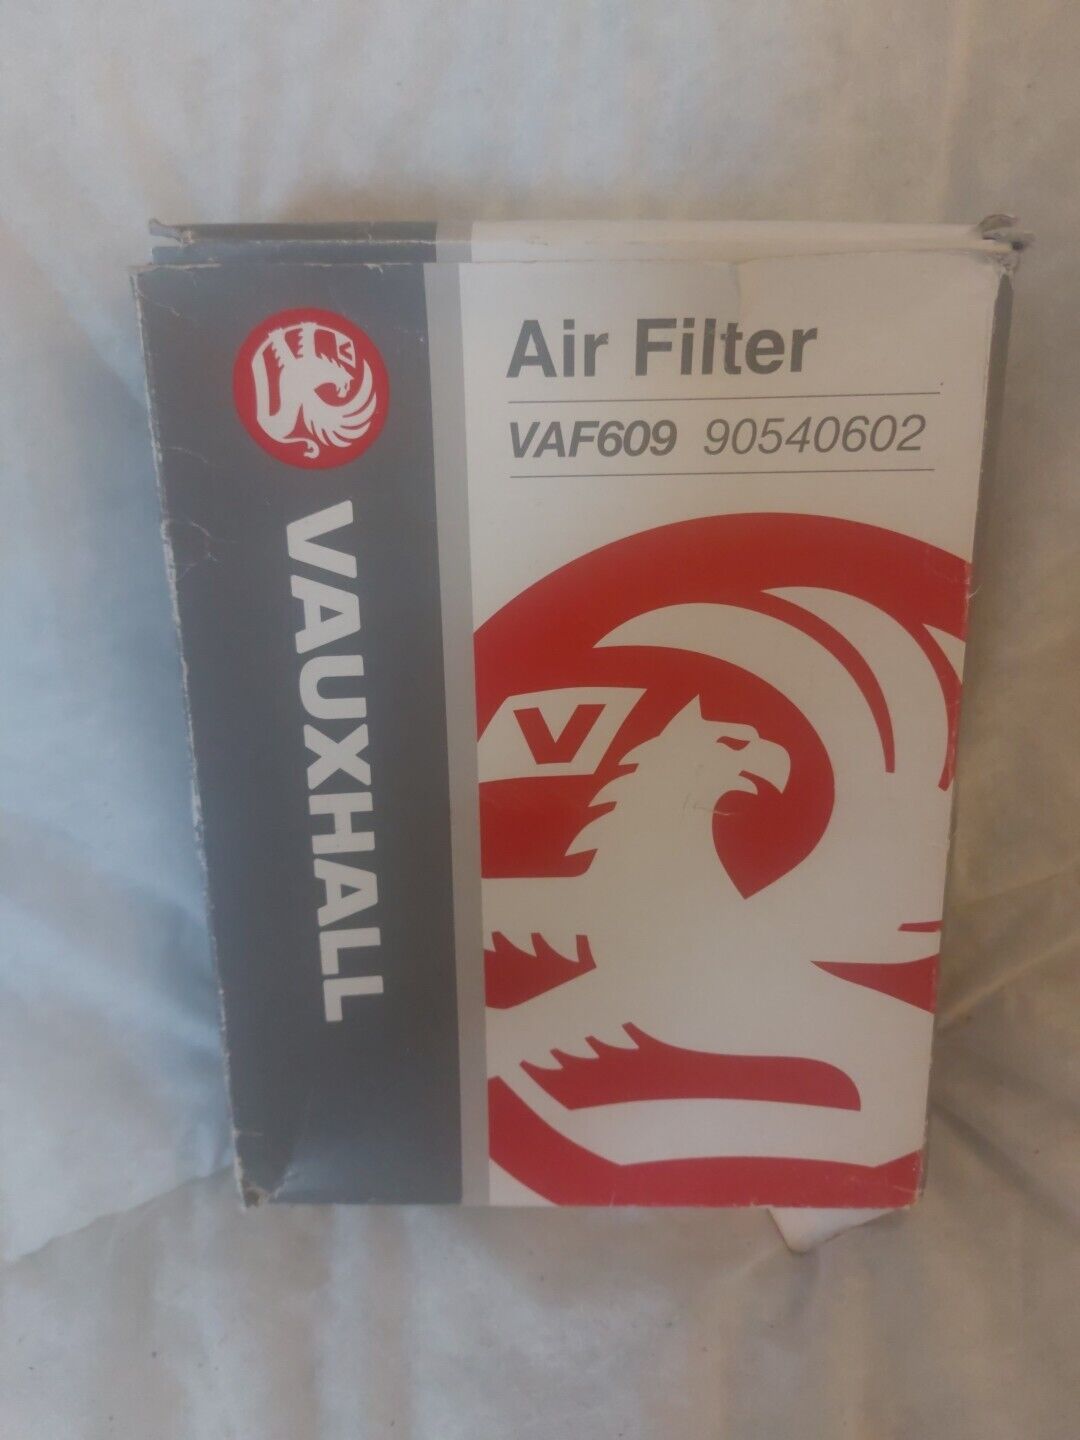 Vauxhall Vectra B 2.2 Air Filter VAF609 90540602 - New Genuine